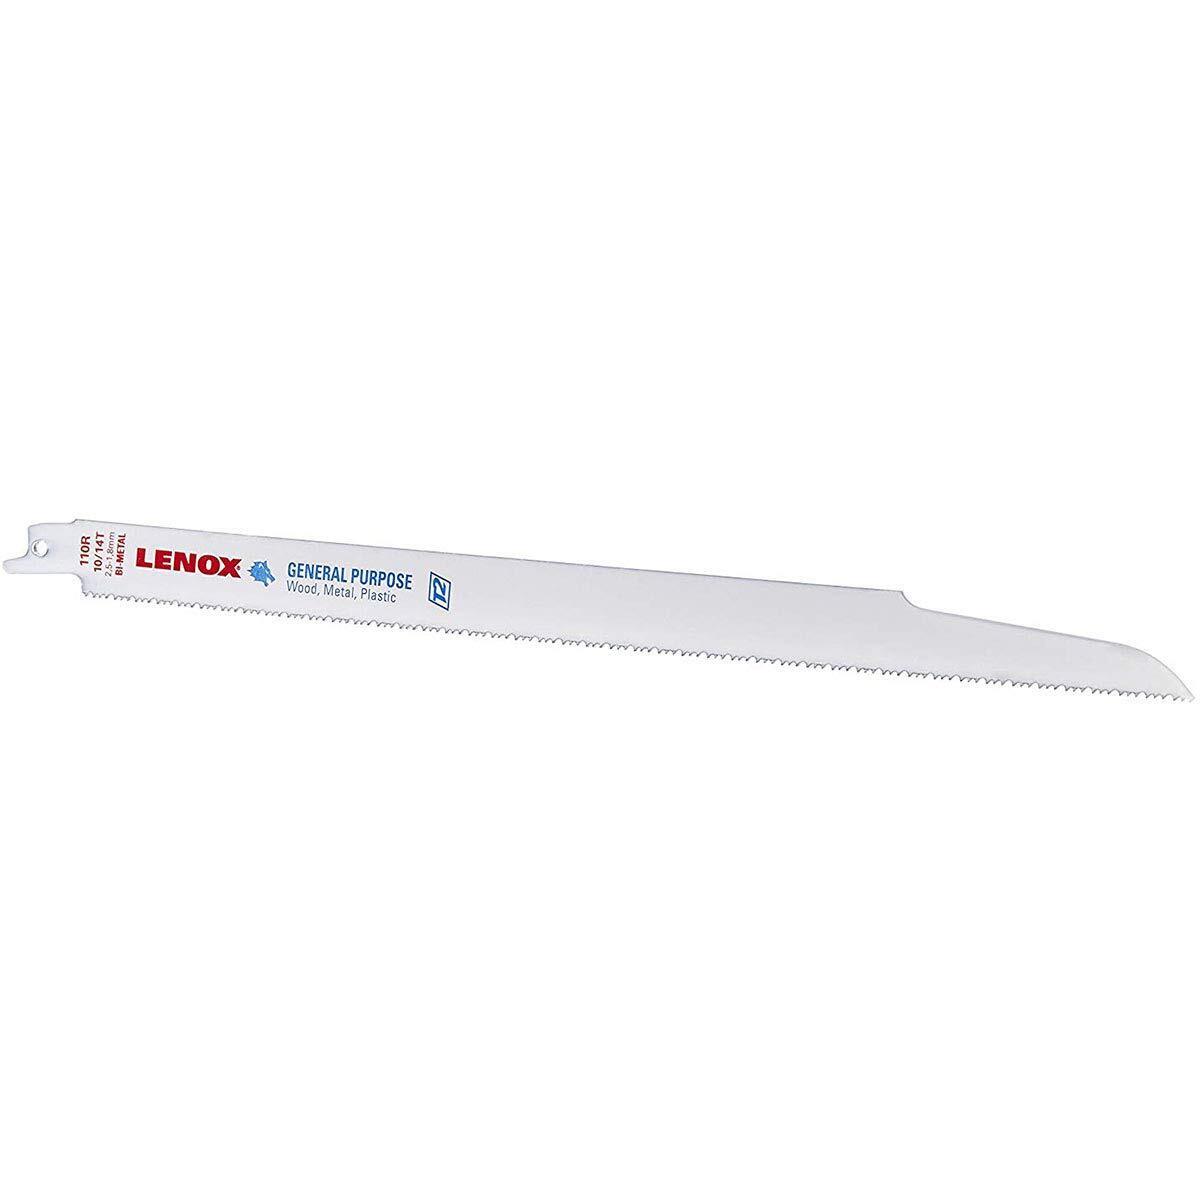 Lenox Tools Bi-metal Reciprocating Saw Blade, 12-inch, 10/14 Tpi, (20583110r)